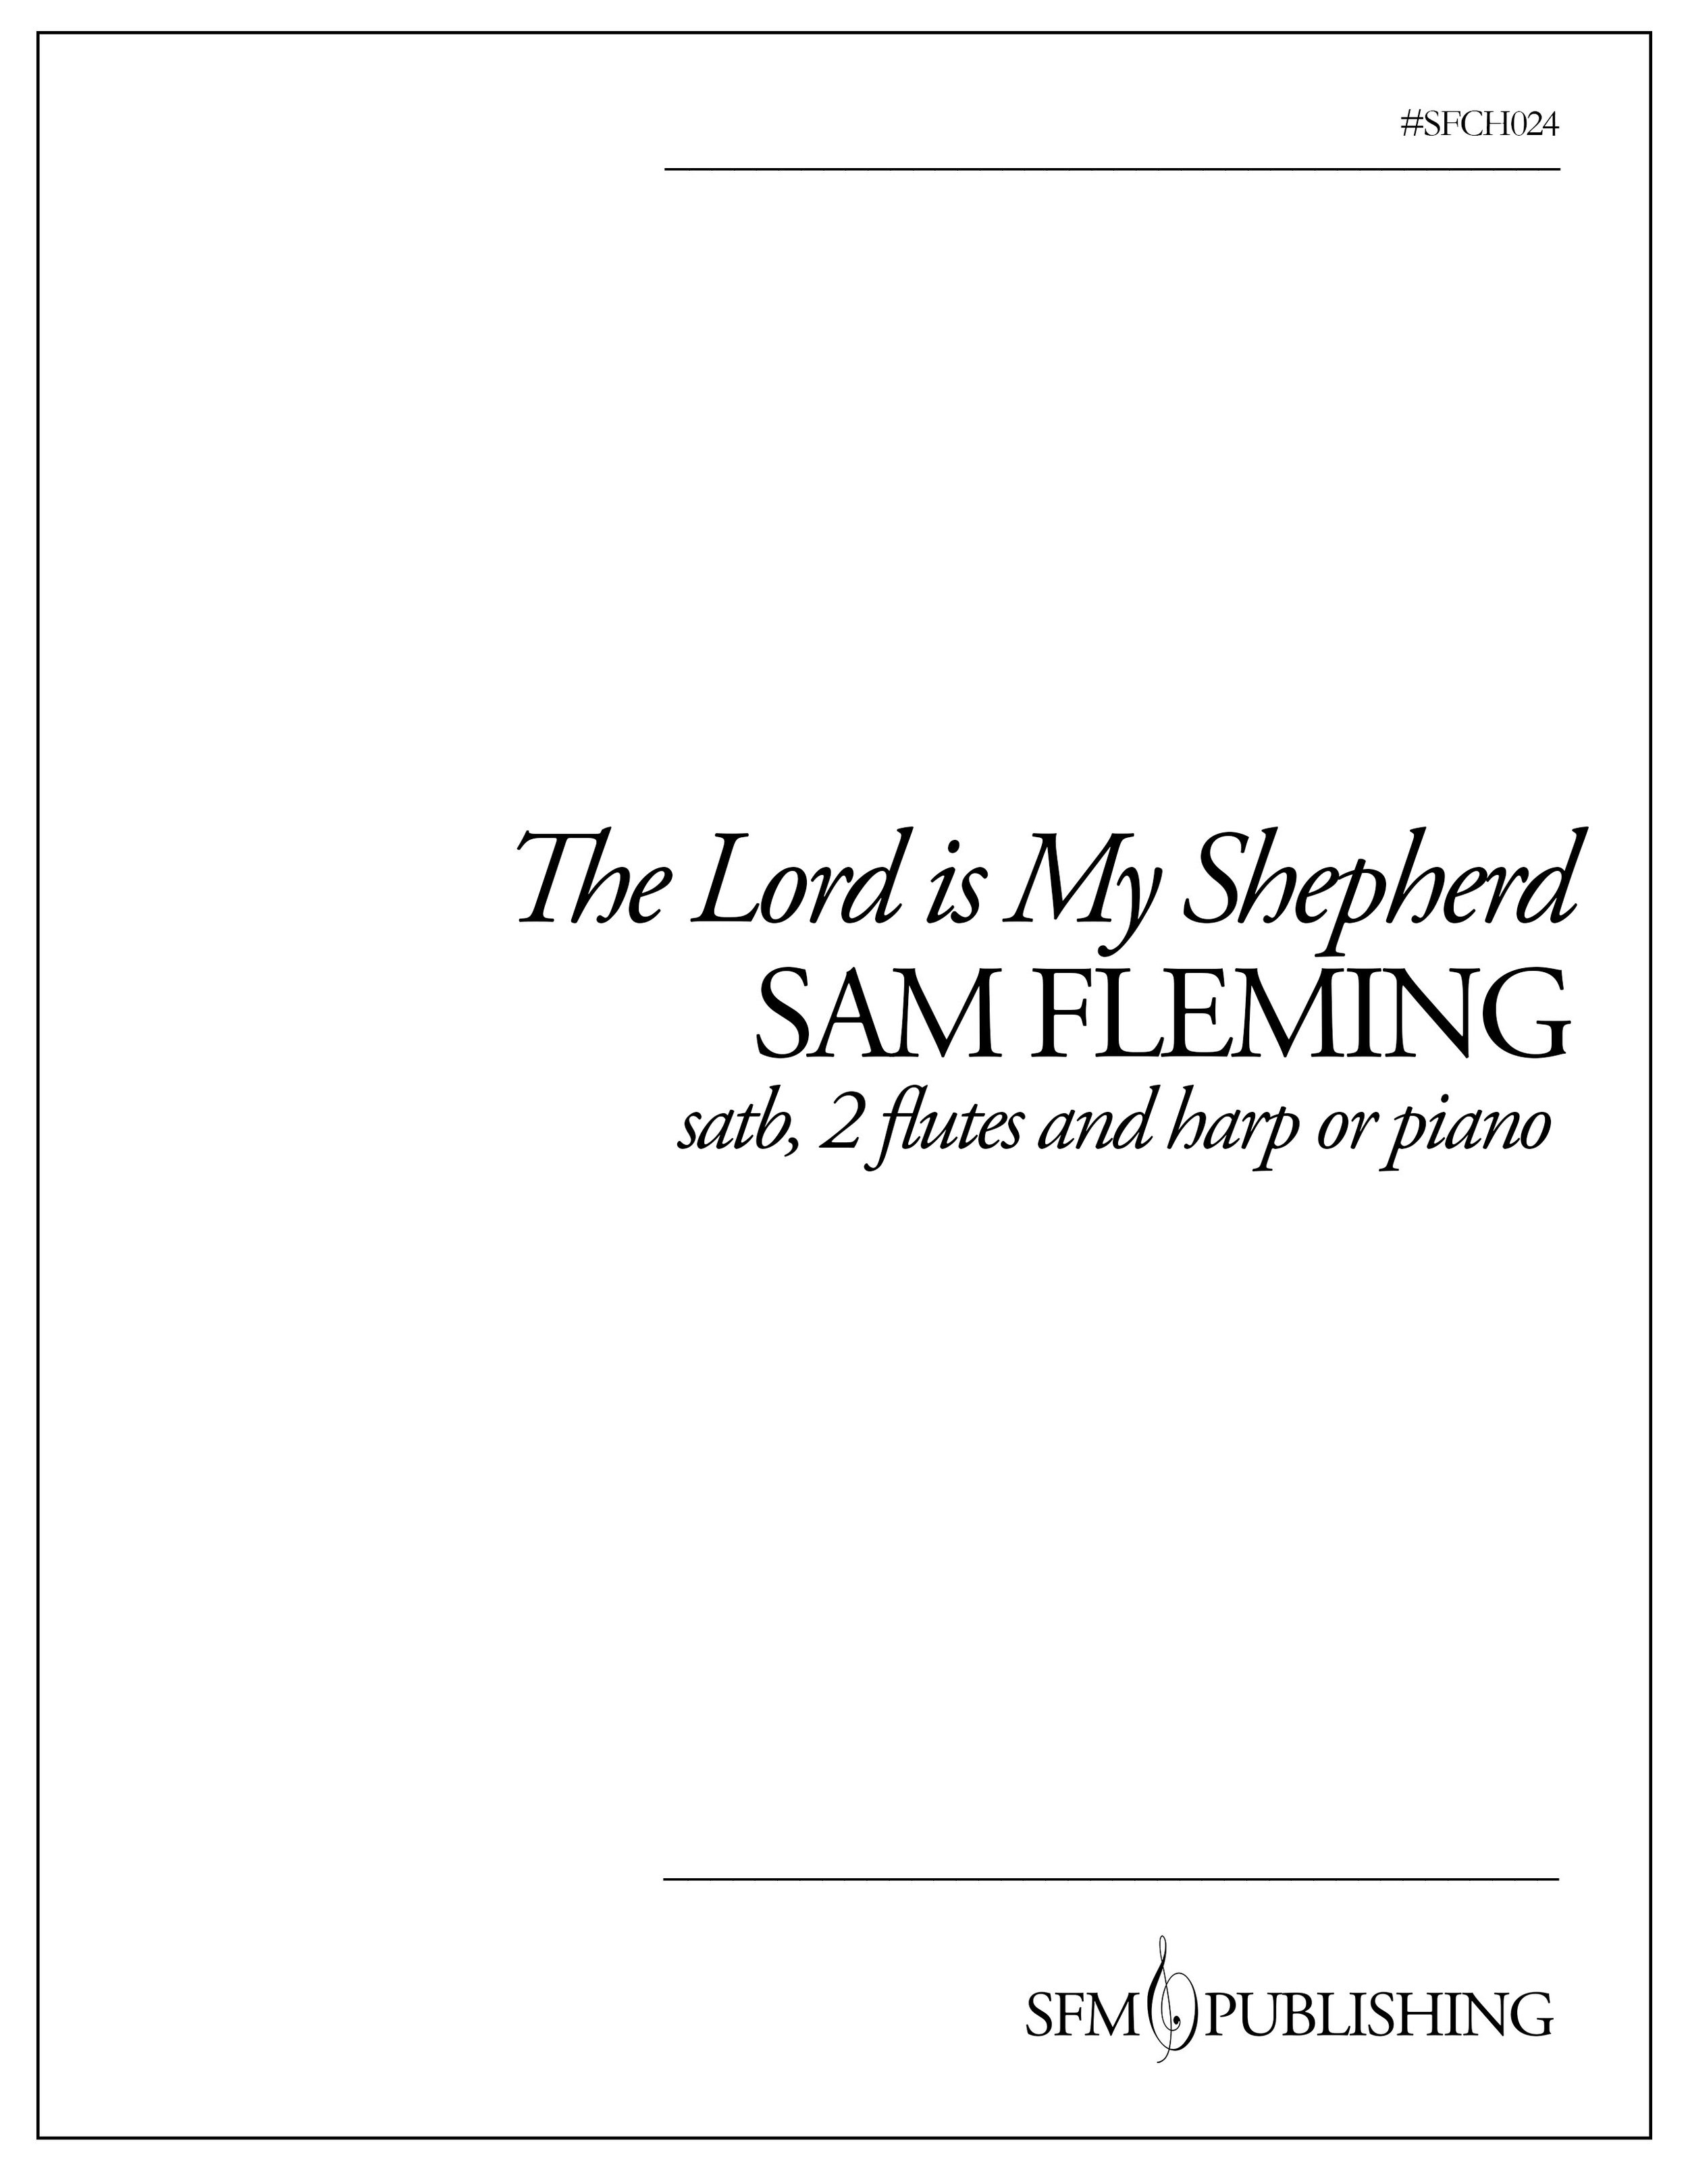 The Lord is My Shepherd Cover Website Image.jpg